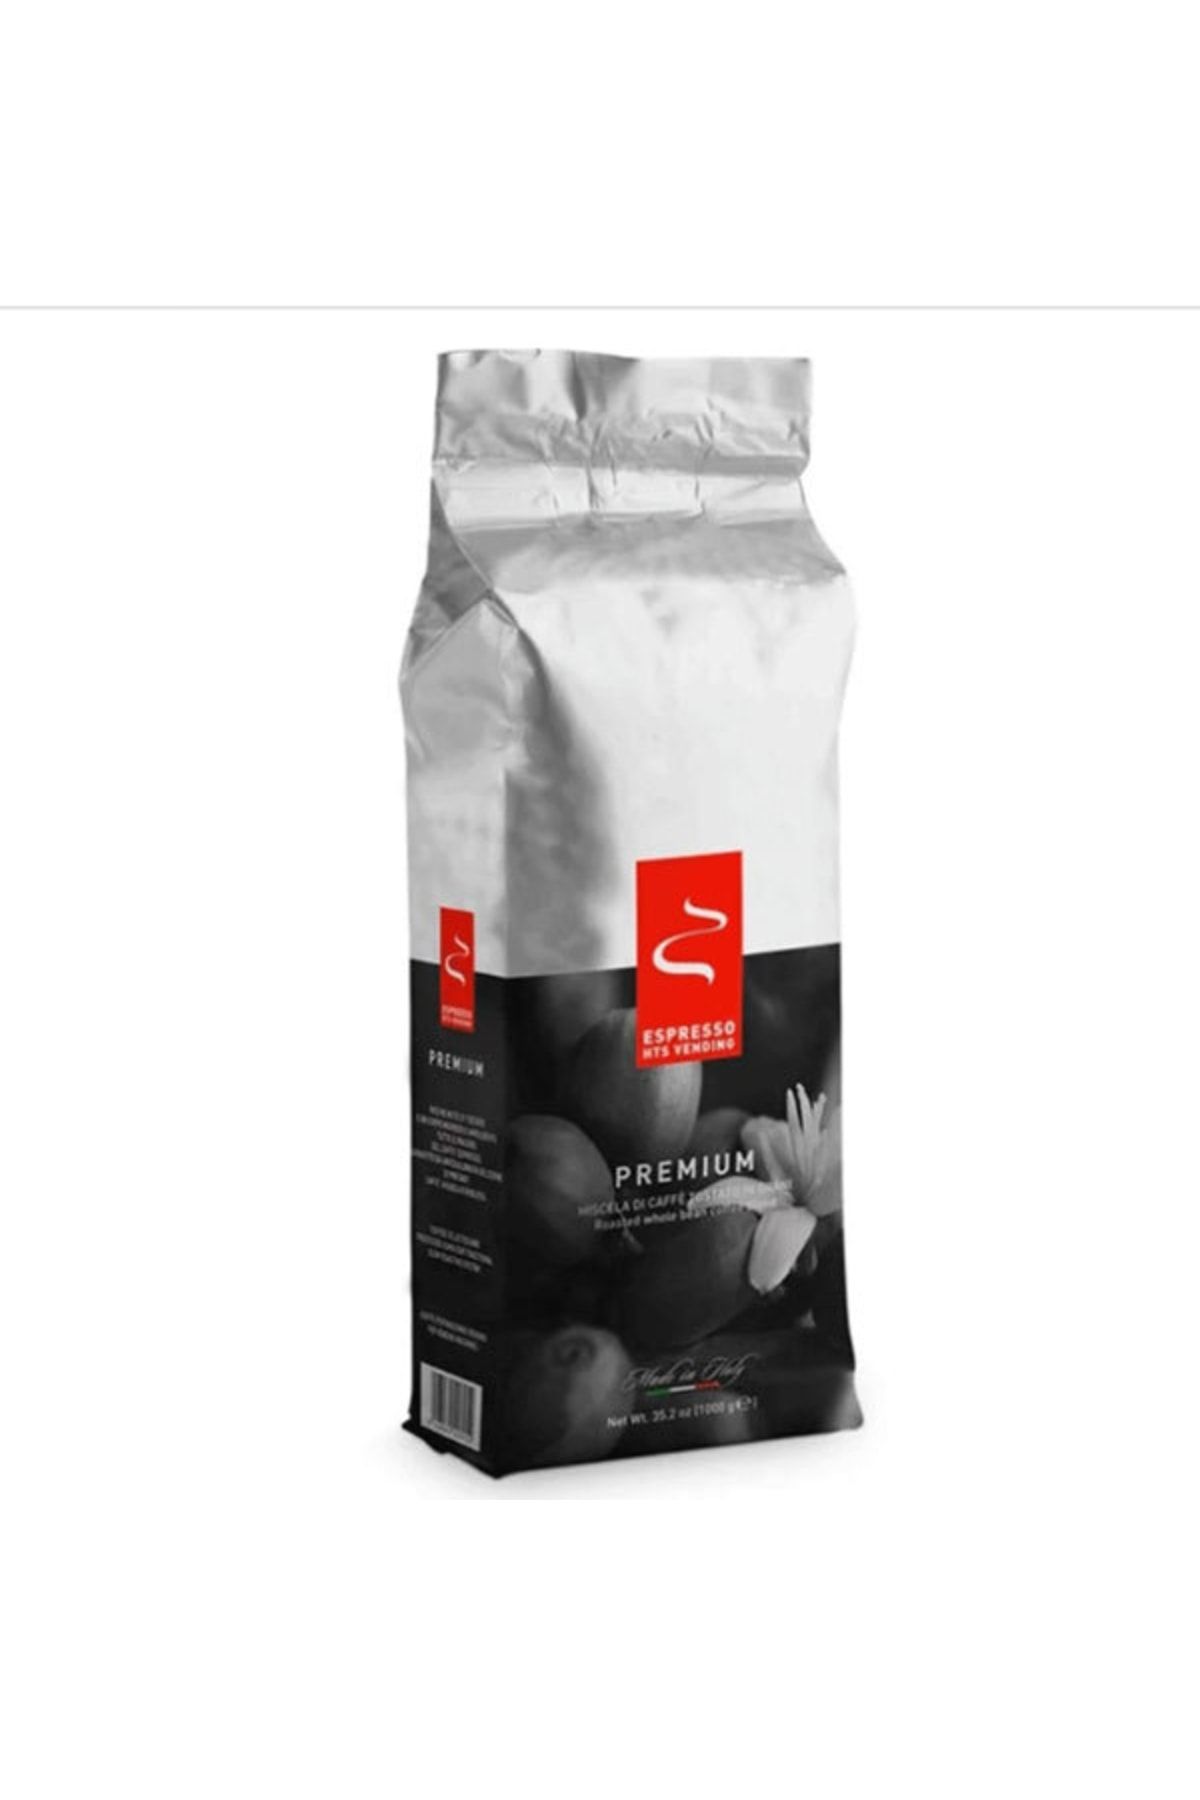 Hausbrandt Vending Premium Çekirdek Kahve 1 Kg